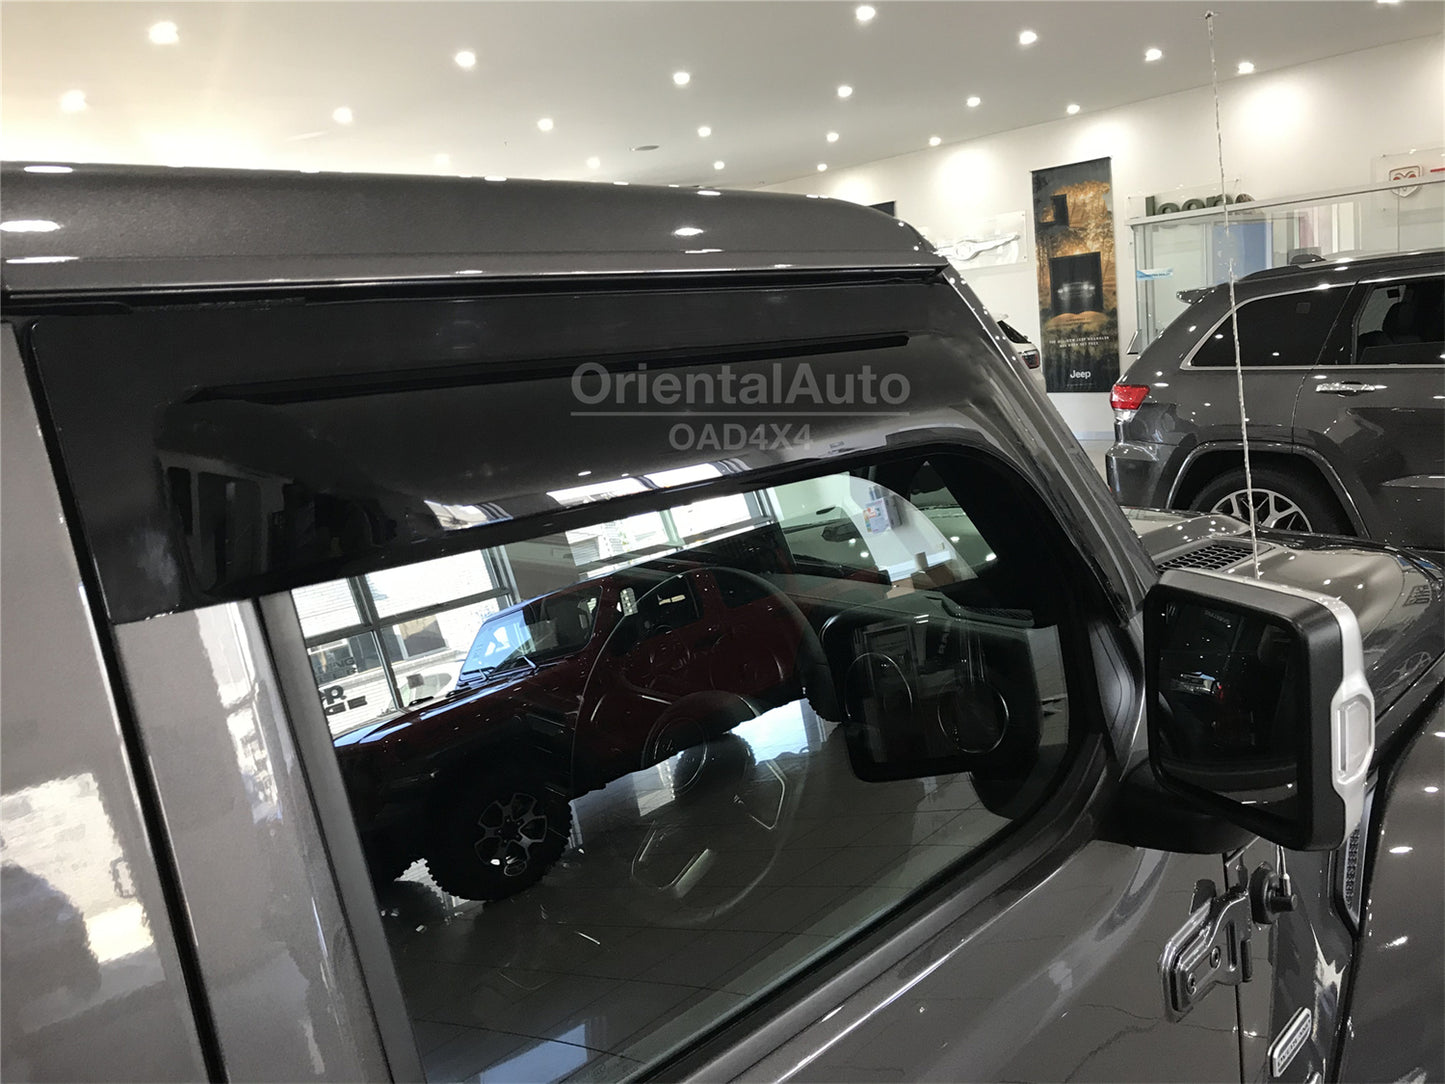 NEW Luxury Weathershields Weather Shields Window Visor For Jeep Wrangler JL 2 Door 2018+ 2pcs